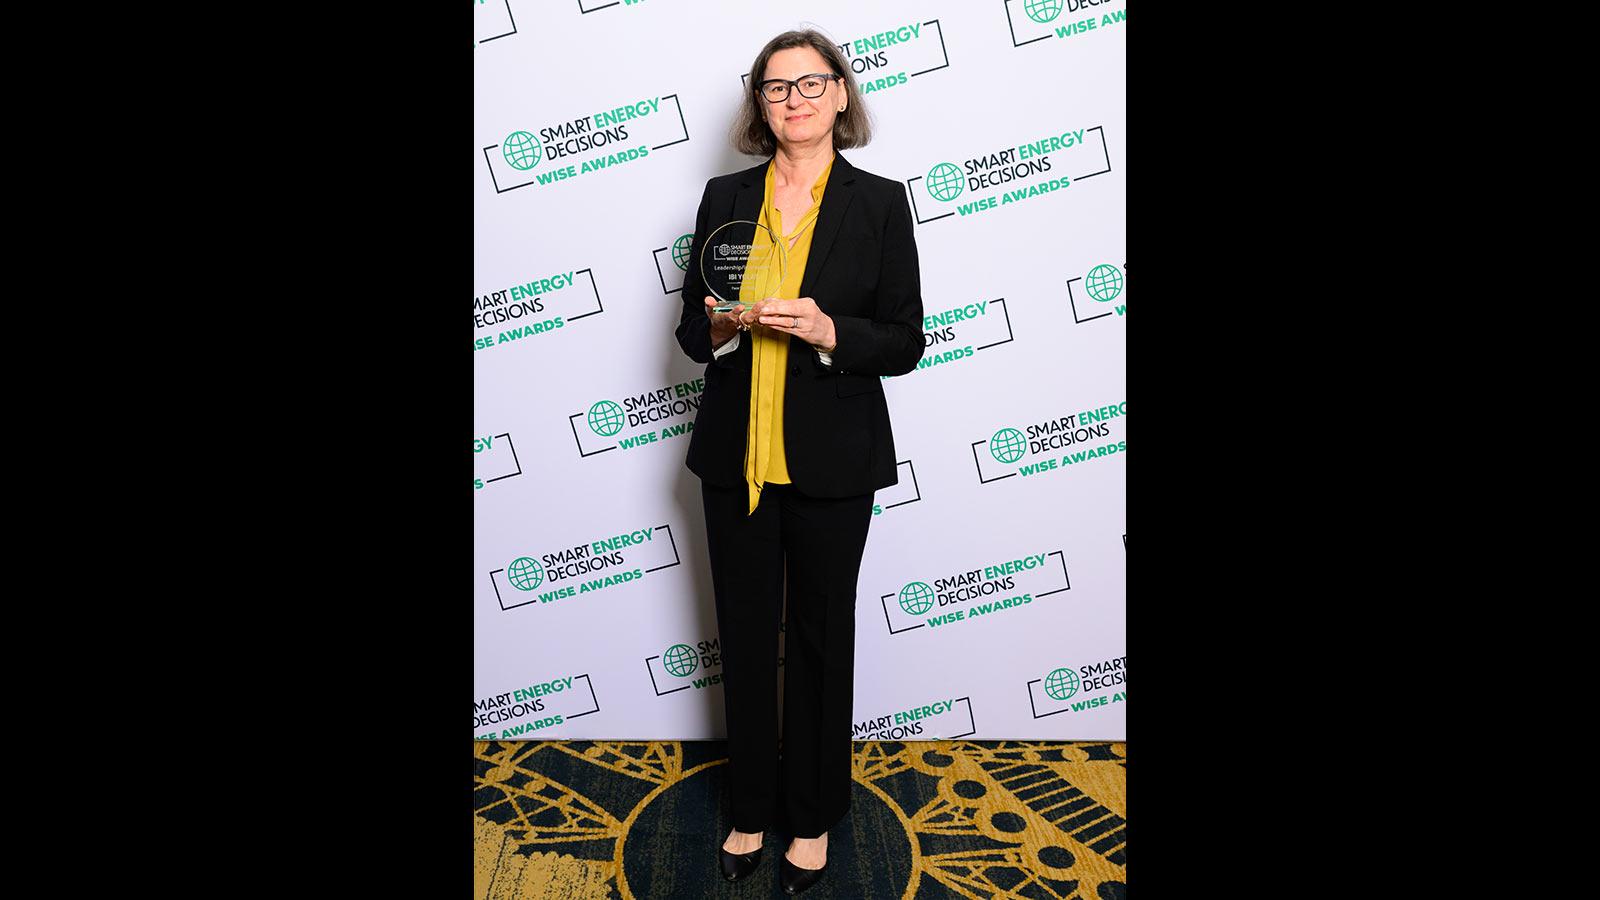 Ibi Yolas the winner of the Smart Engery Decisions' Women in Smart Energy Award